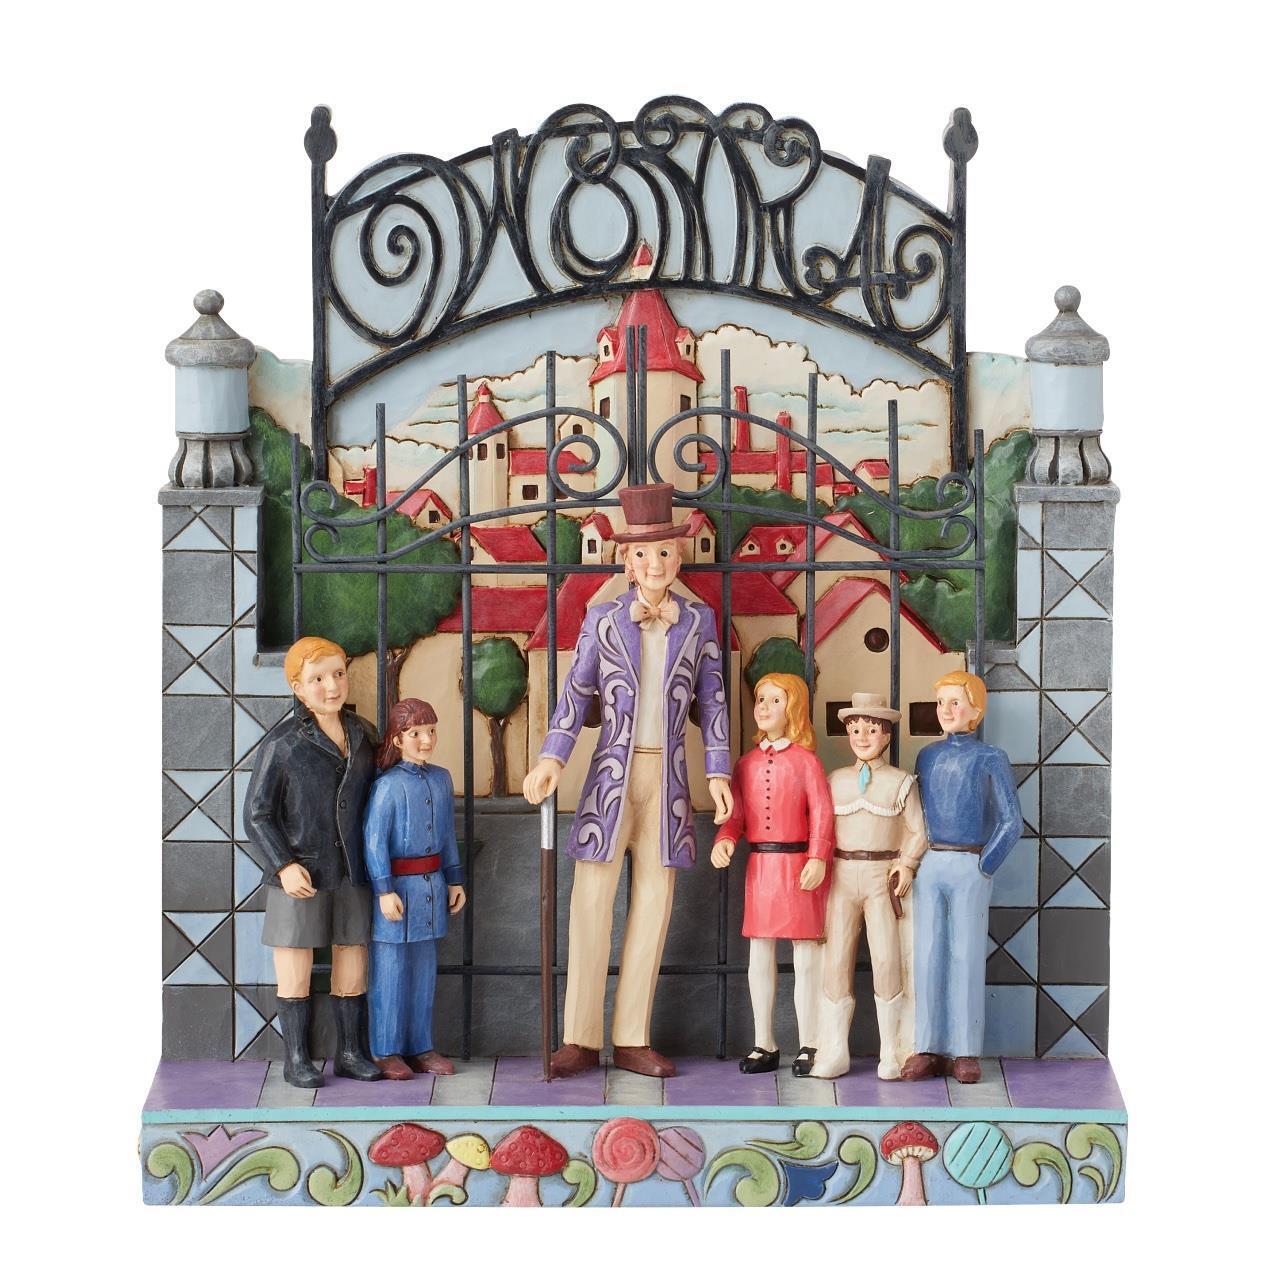 Jim Shore Willy Wonka Willy Wonka with Children By Gate Figurine 6013721